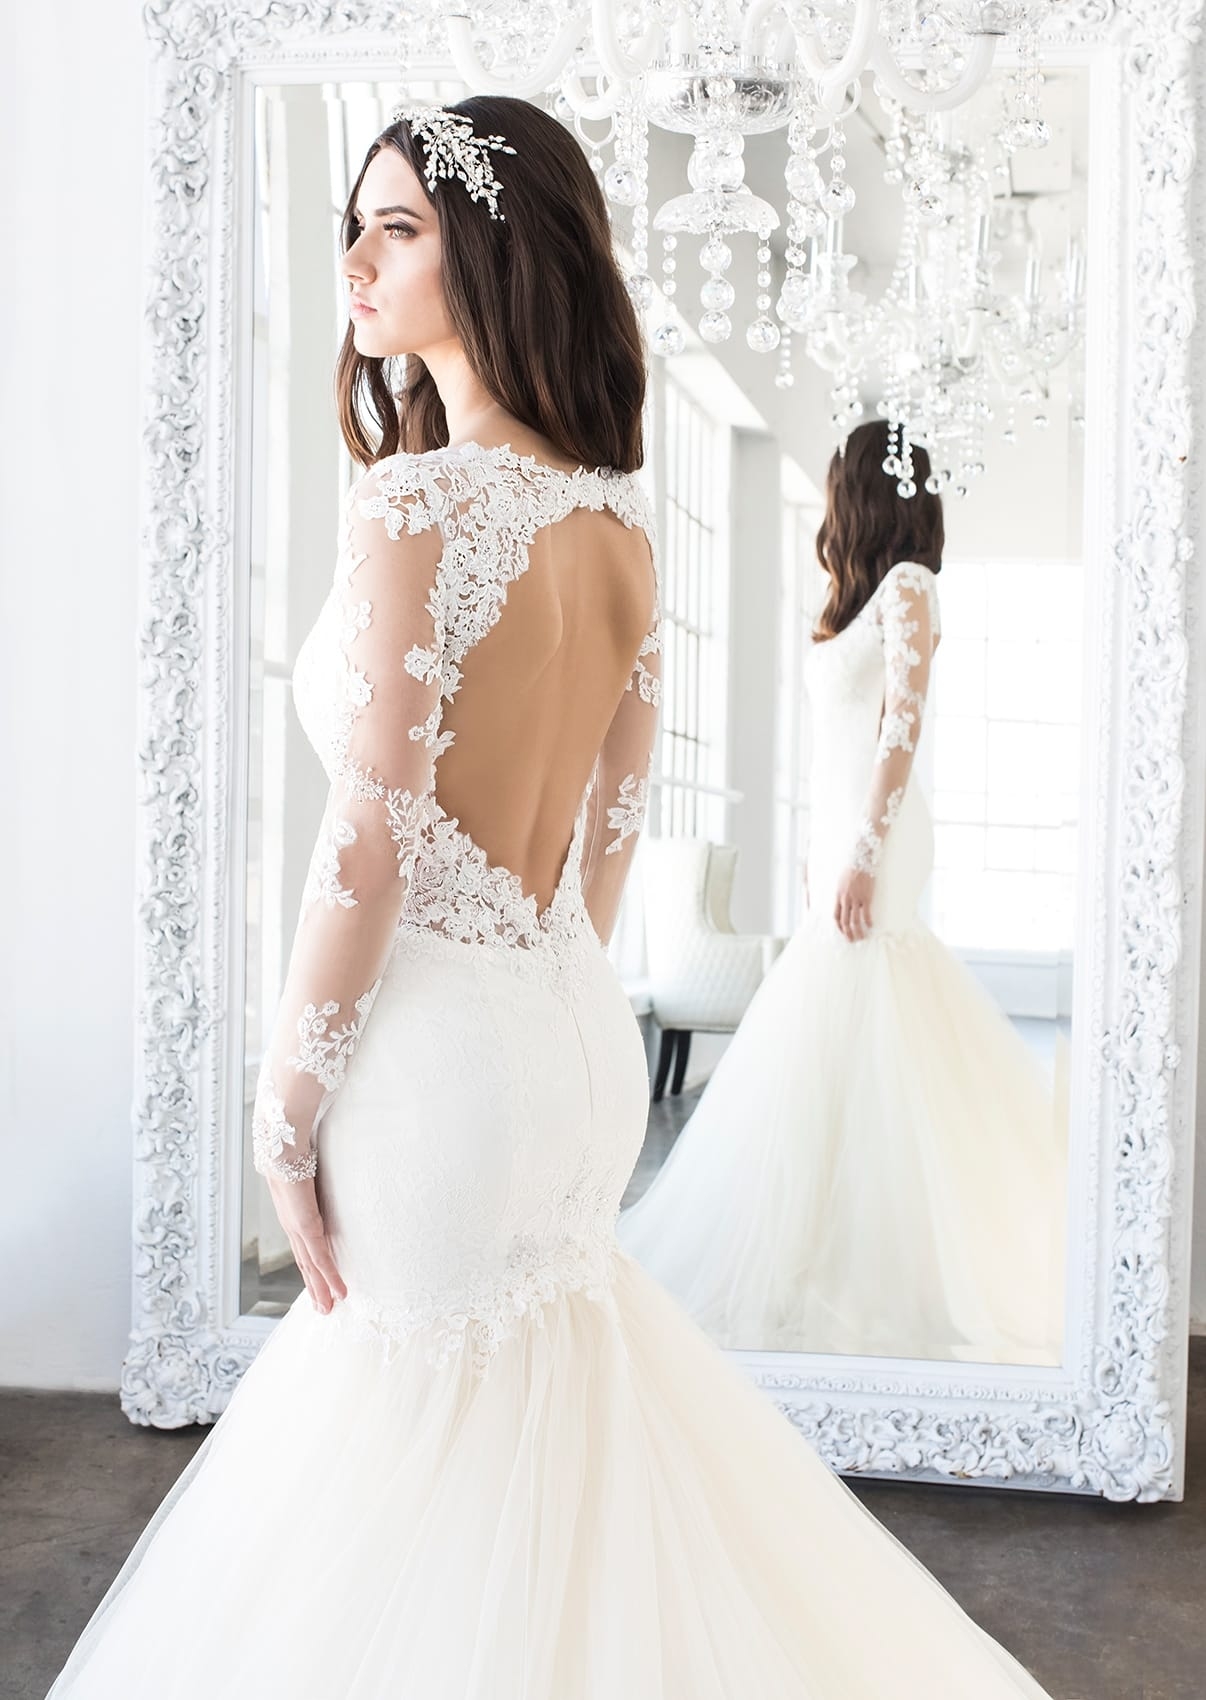 Custom Designer Wedding Dress EVERLY-3251